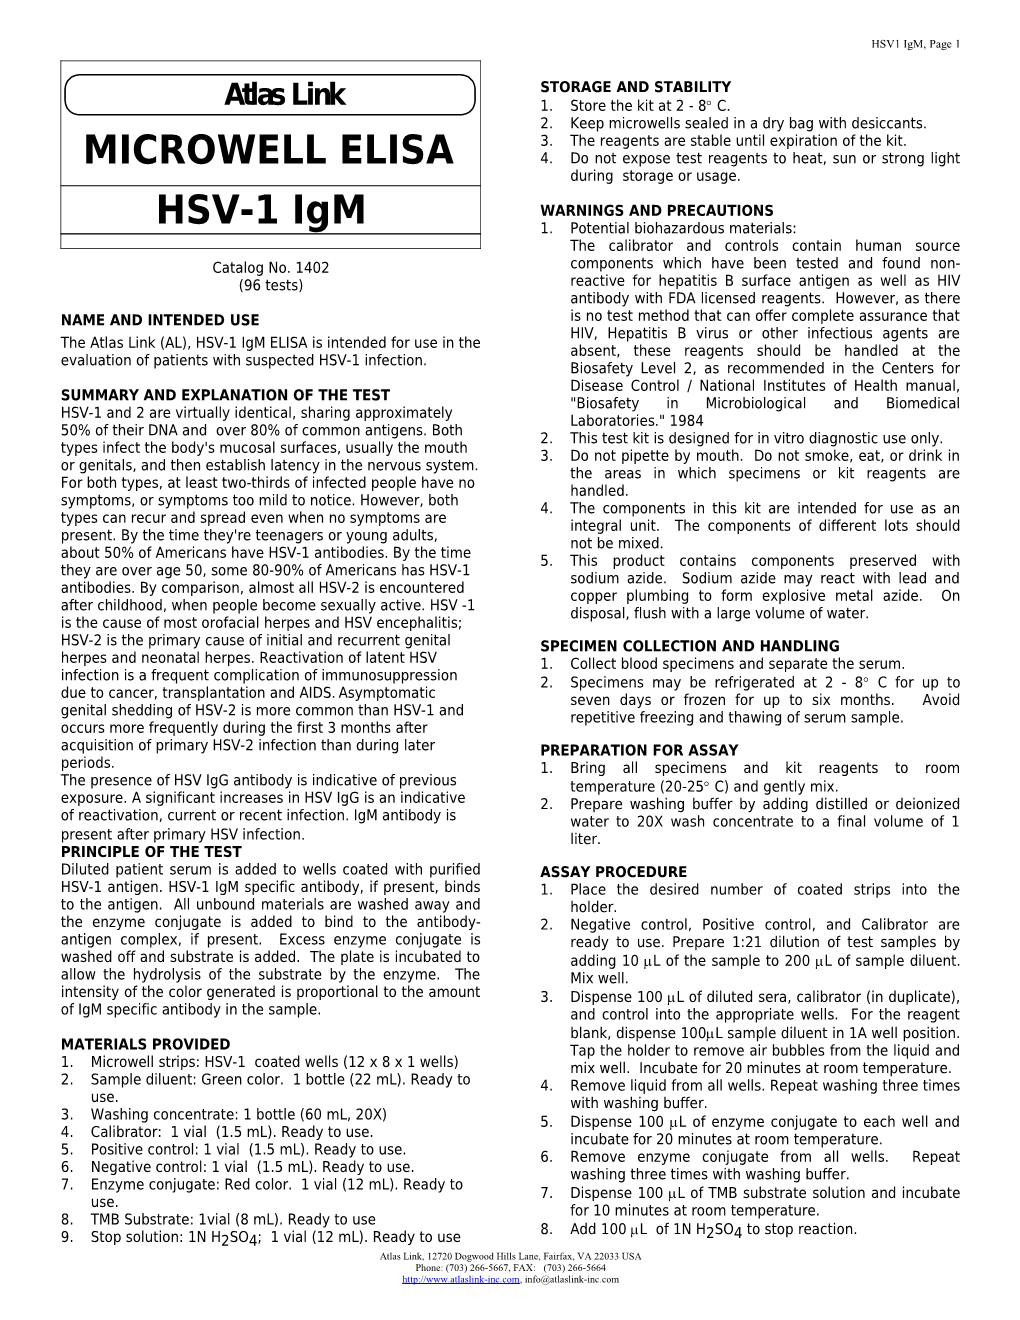 HSV-1 Igm by ELISA